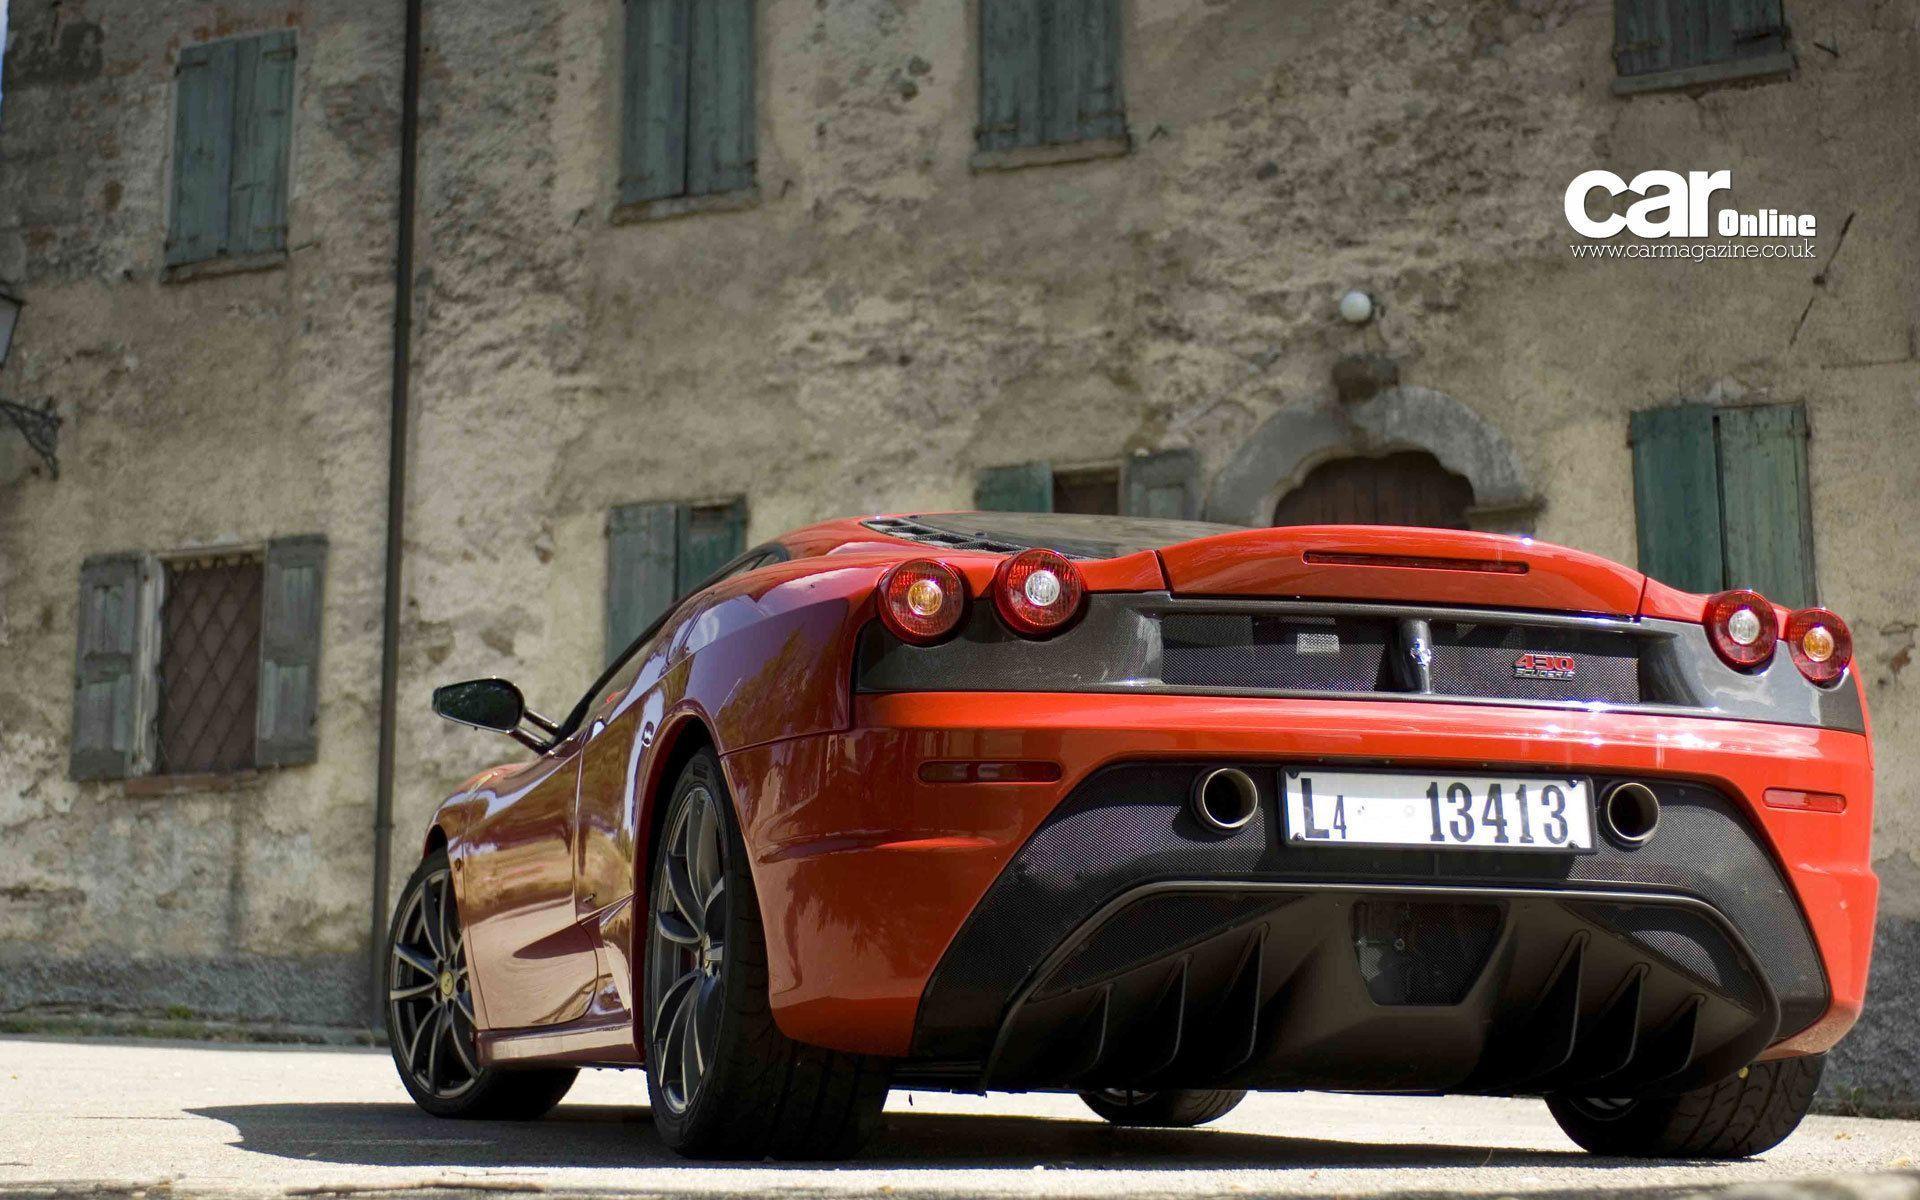 Ferrari F430 Wallpapers